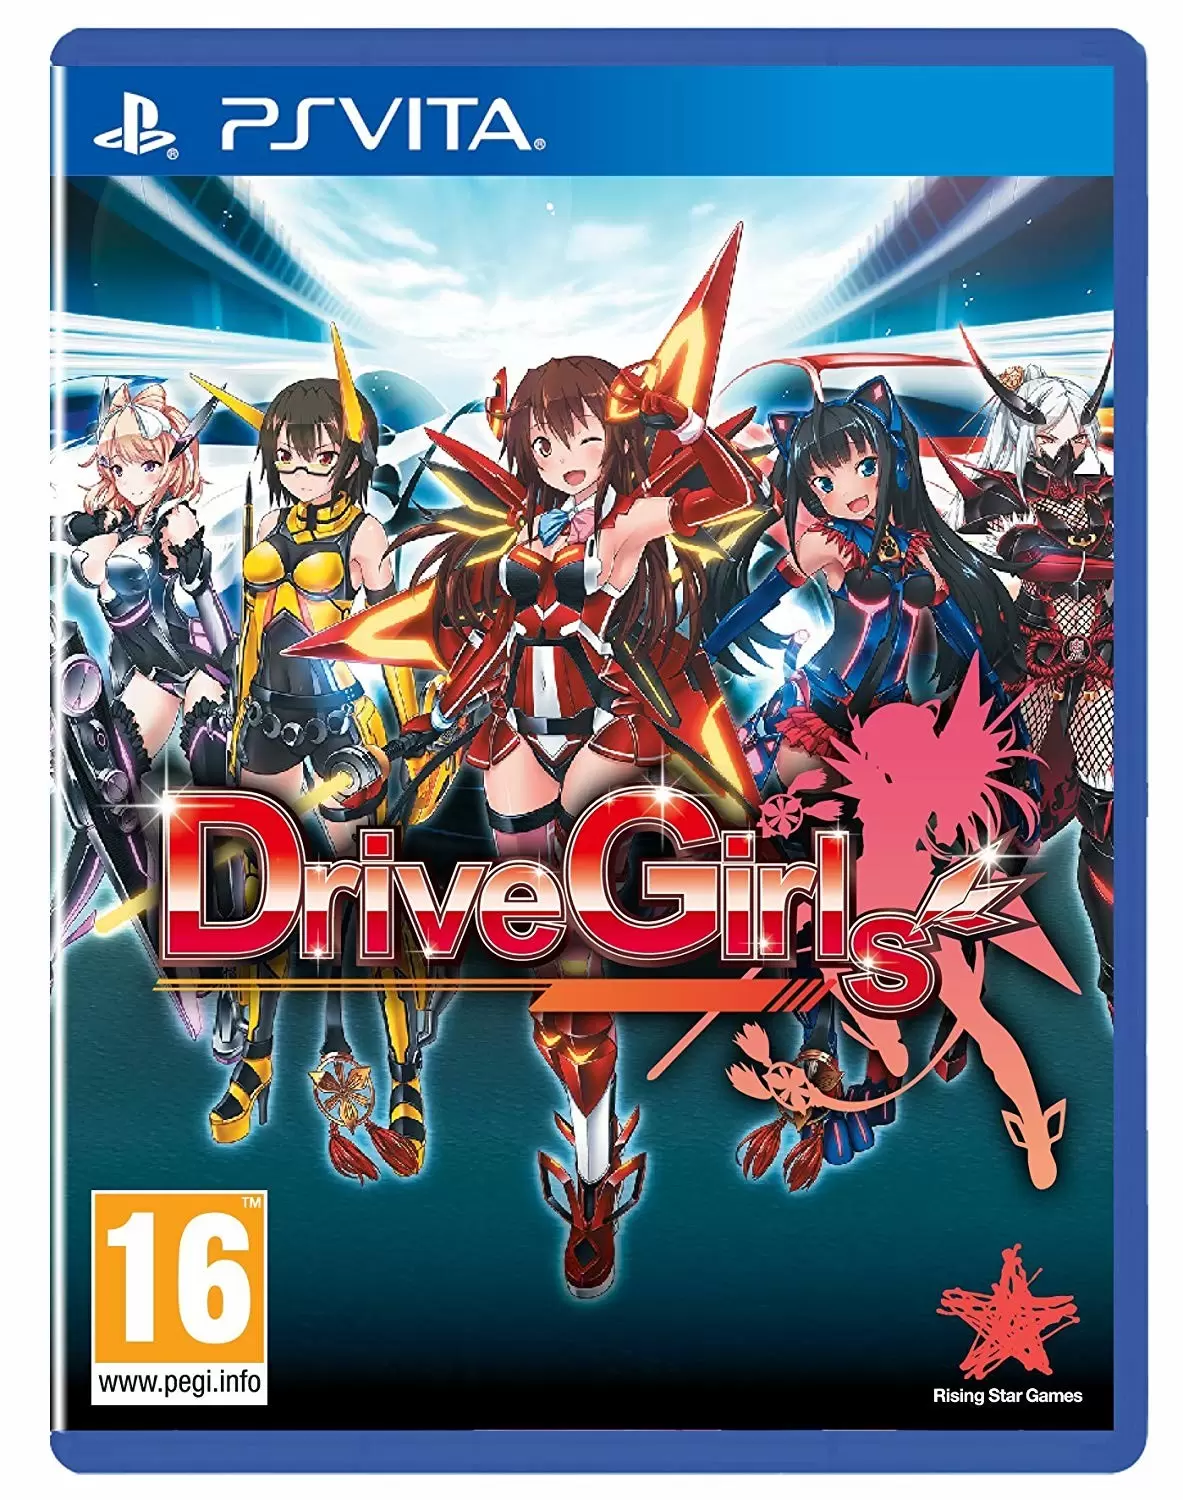 PS Vita Games - Drive Girls